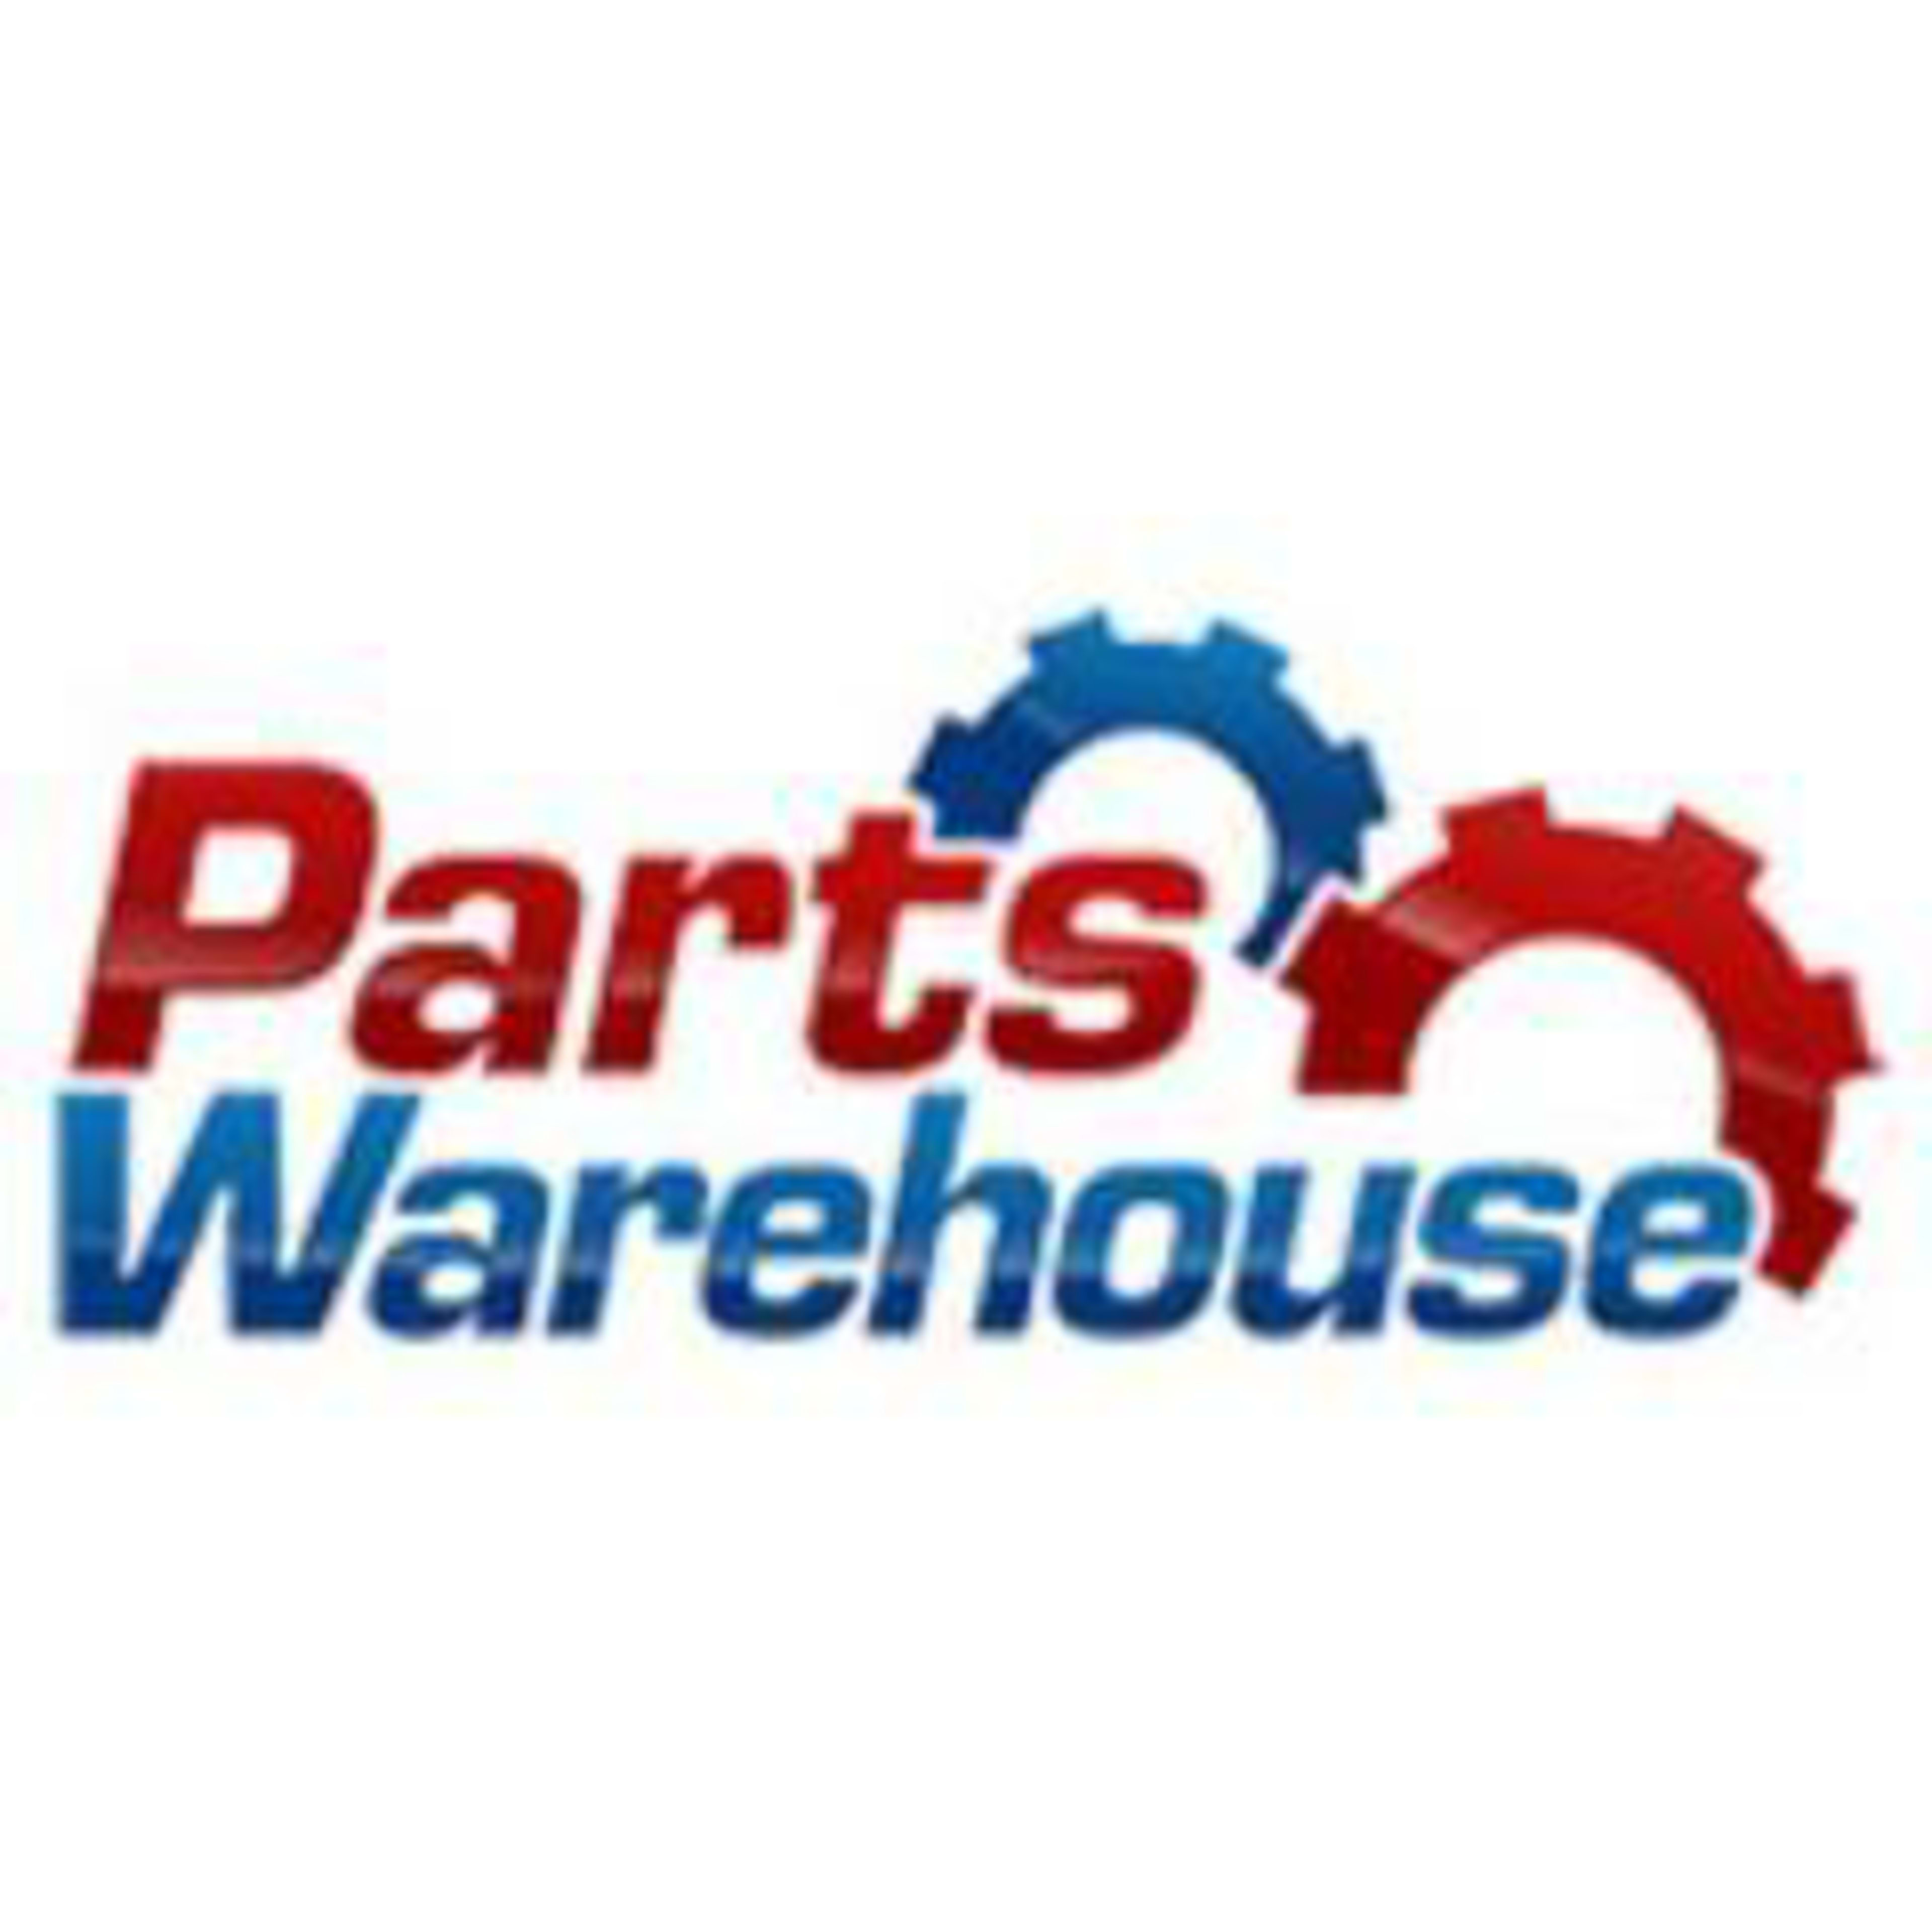 Partswarehouse.com Code